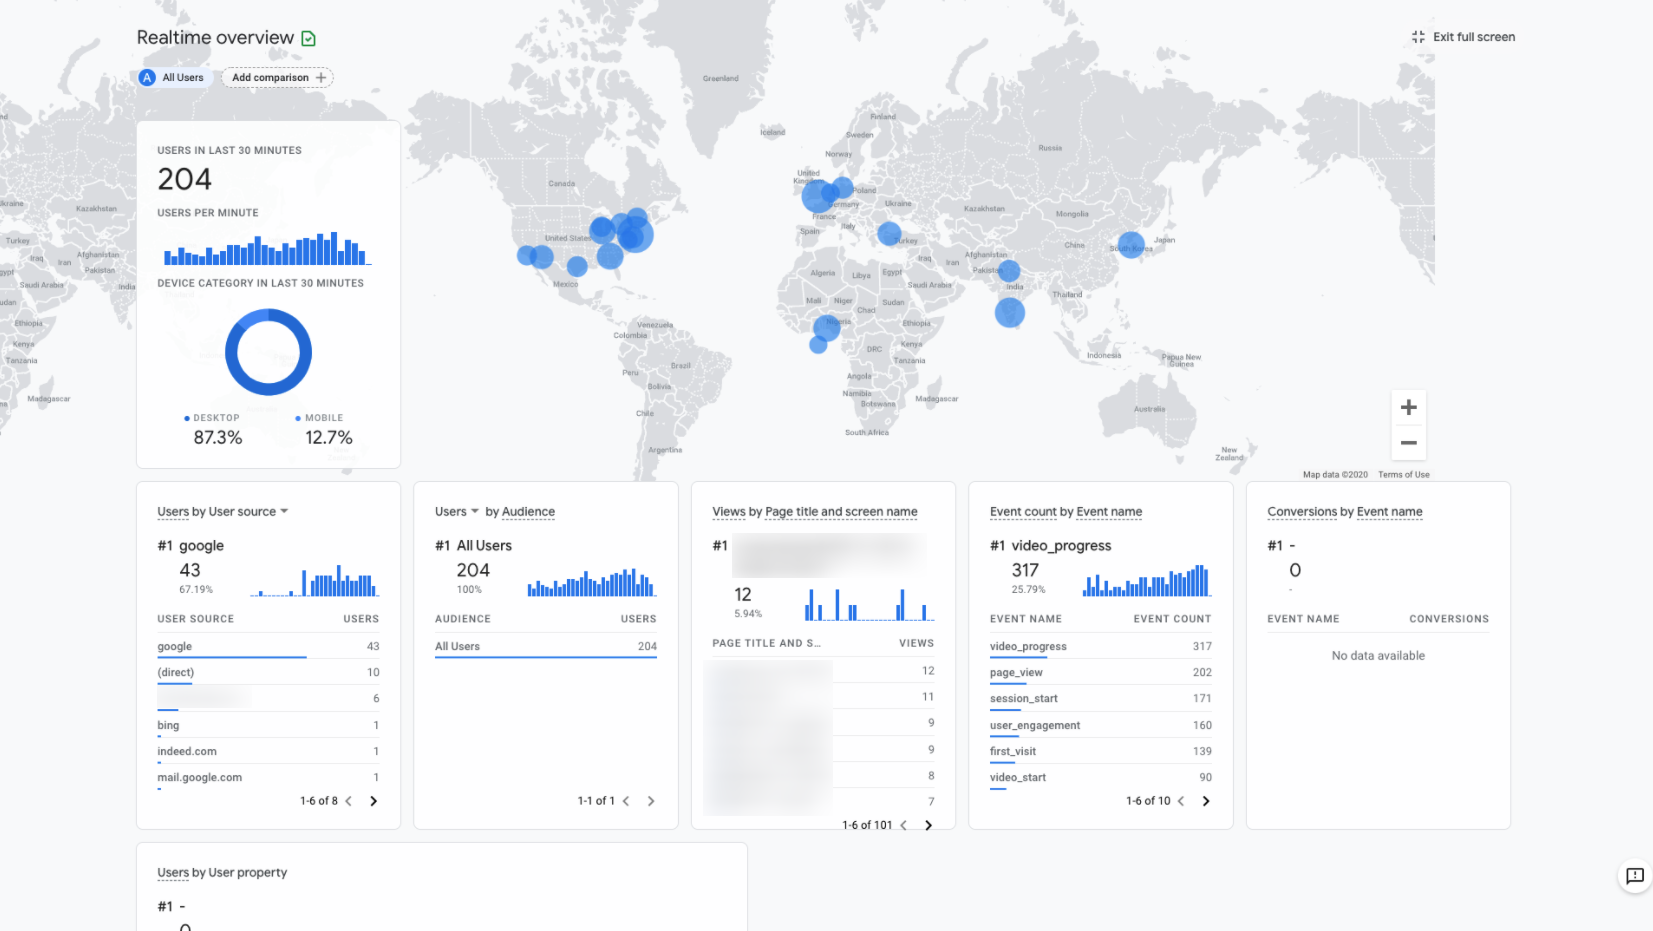 Snapshot of global realtime data report in Google Analytics 4